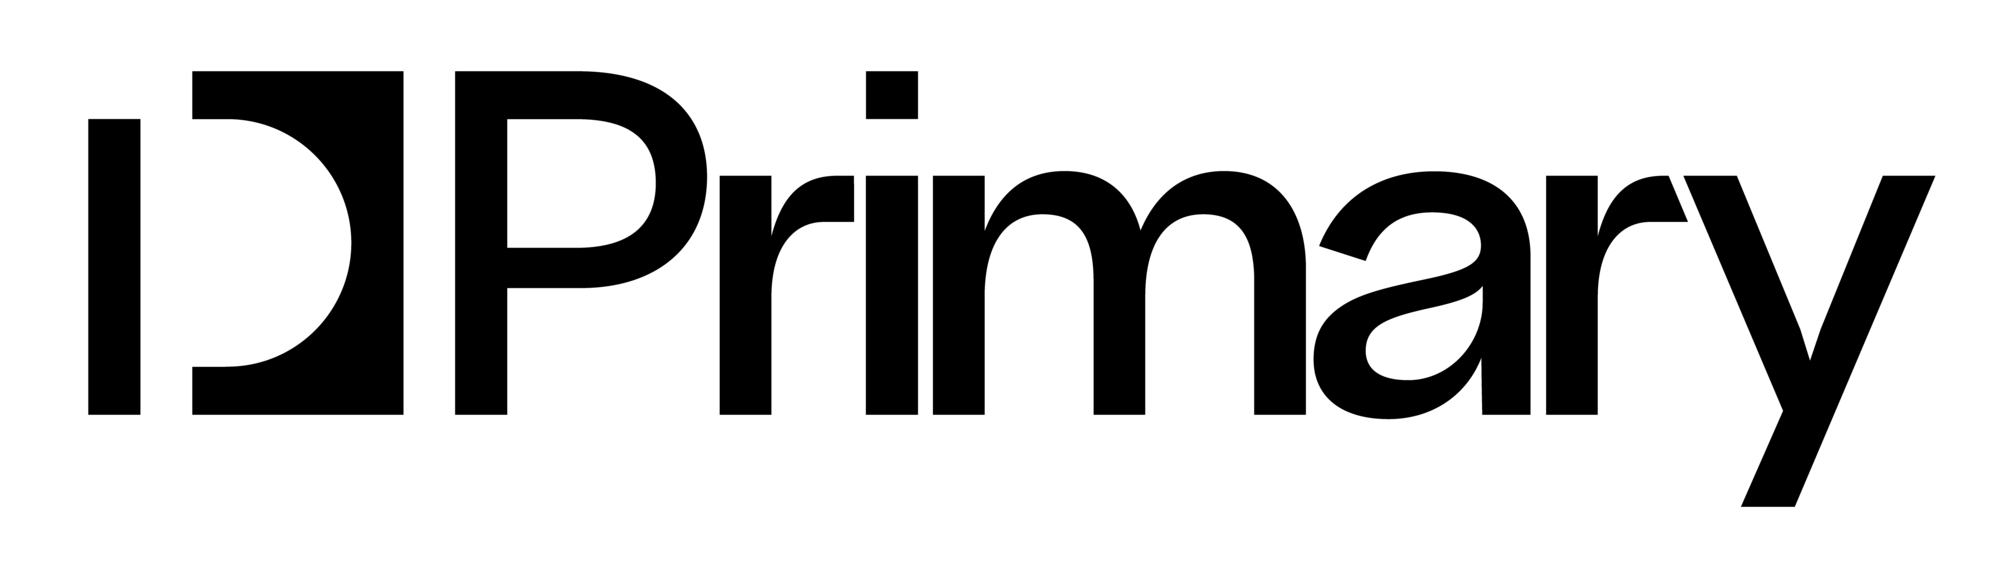 Black Logo of Primary